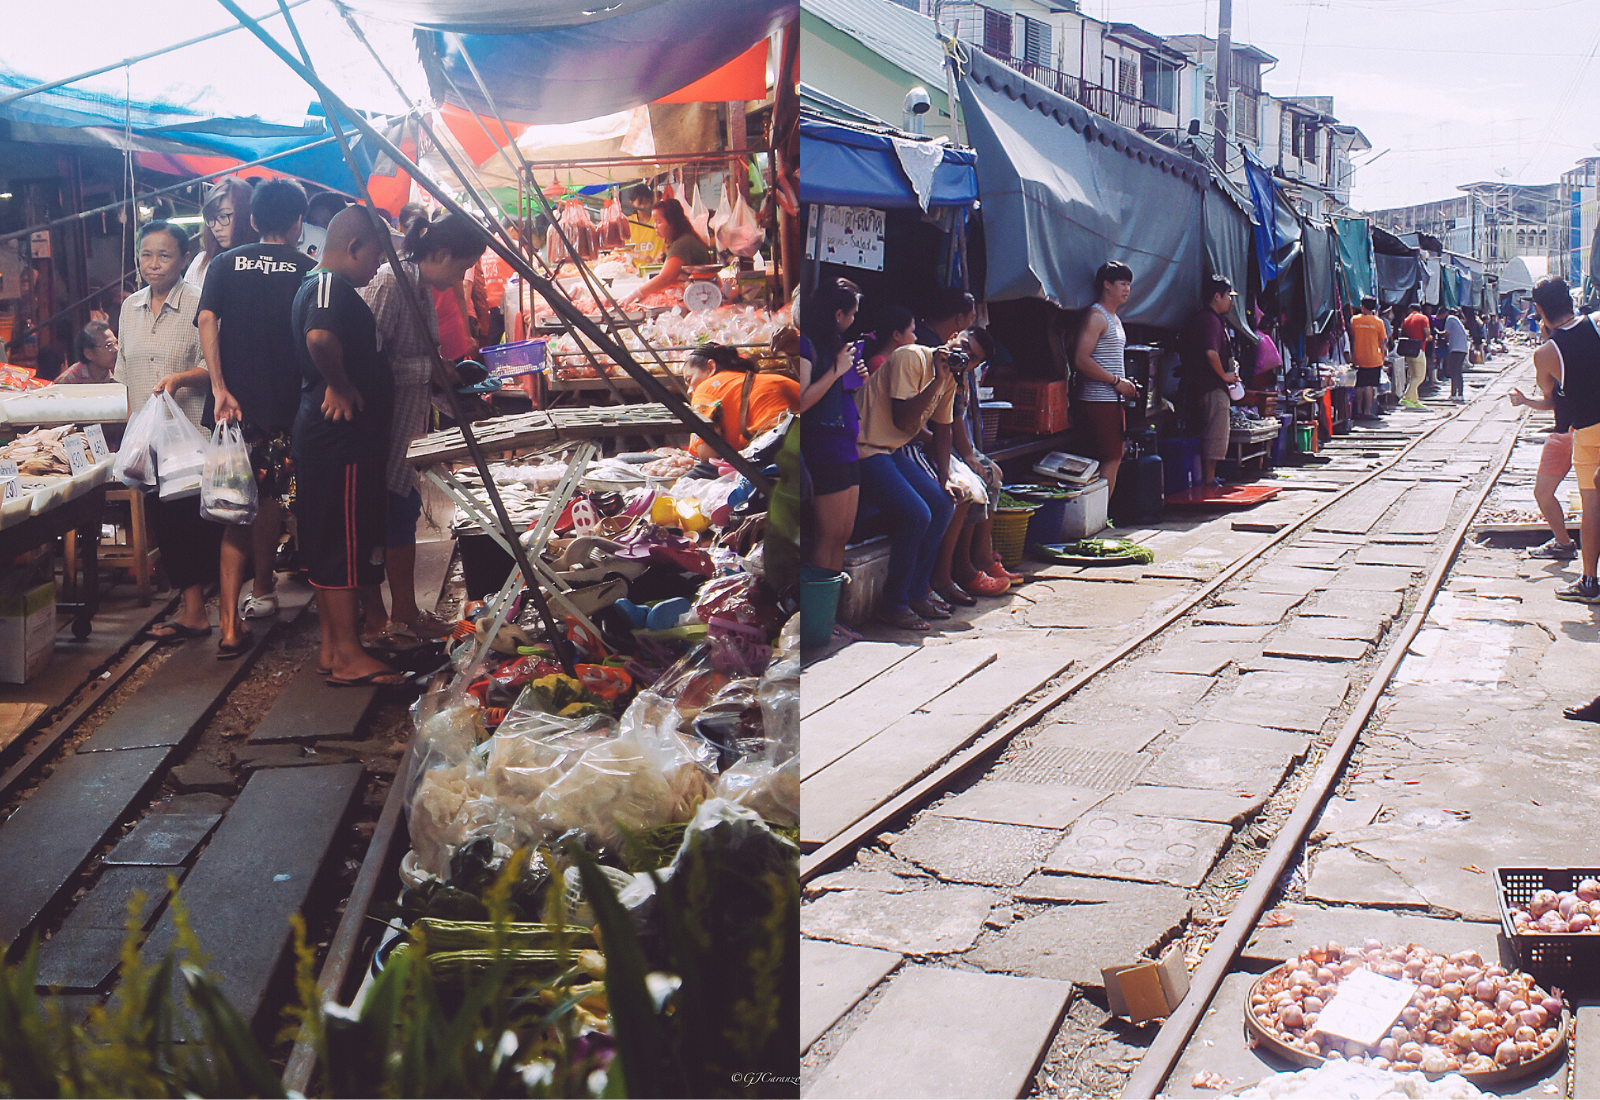 The Maeklong Railway Market: Things to Do in Thailand